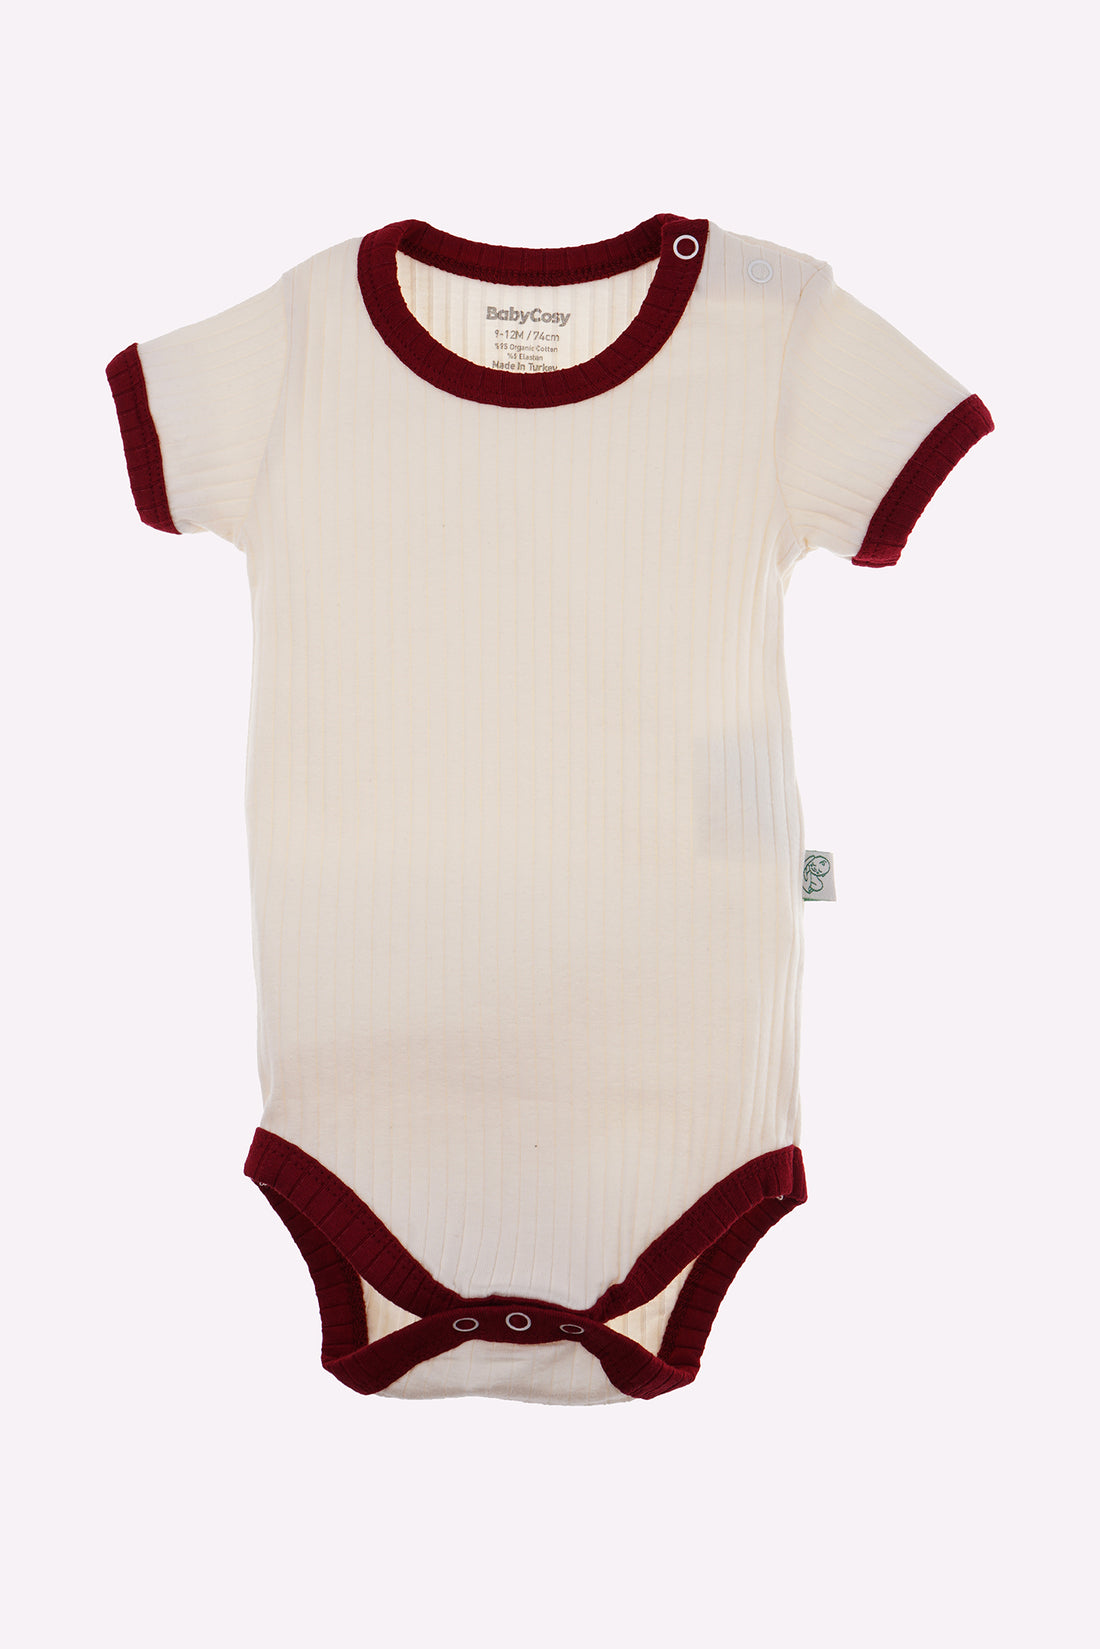 Babycosy Organic Shortsleeves Bodysuit Set of 2 (Creamy White & Red)